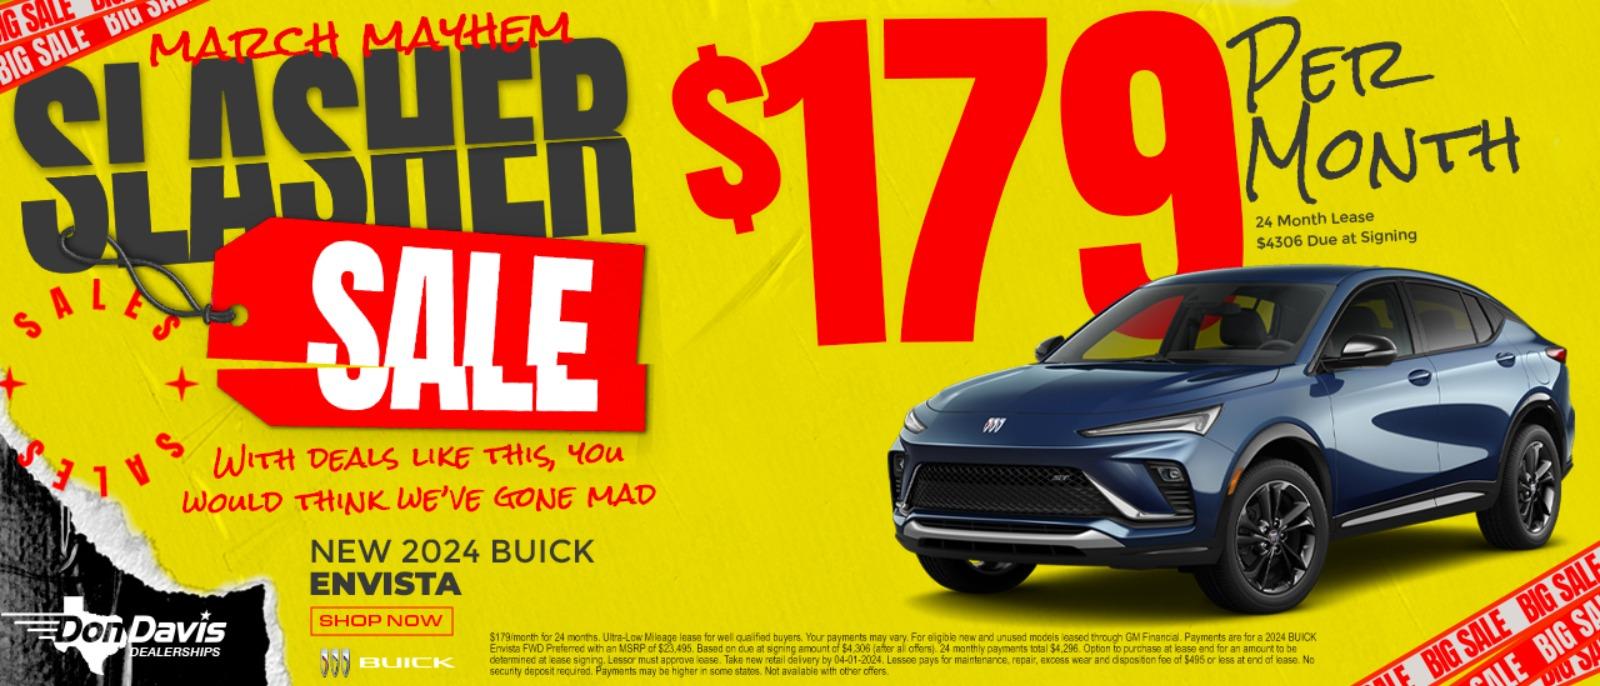 March Mayhem Slasher Sale | New 2024 Buick Envista